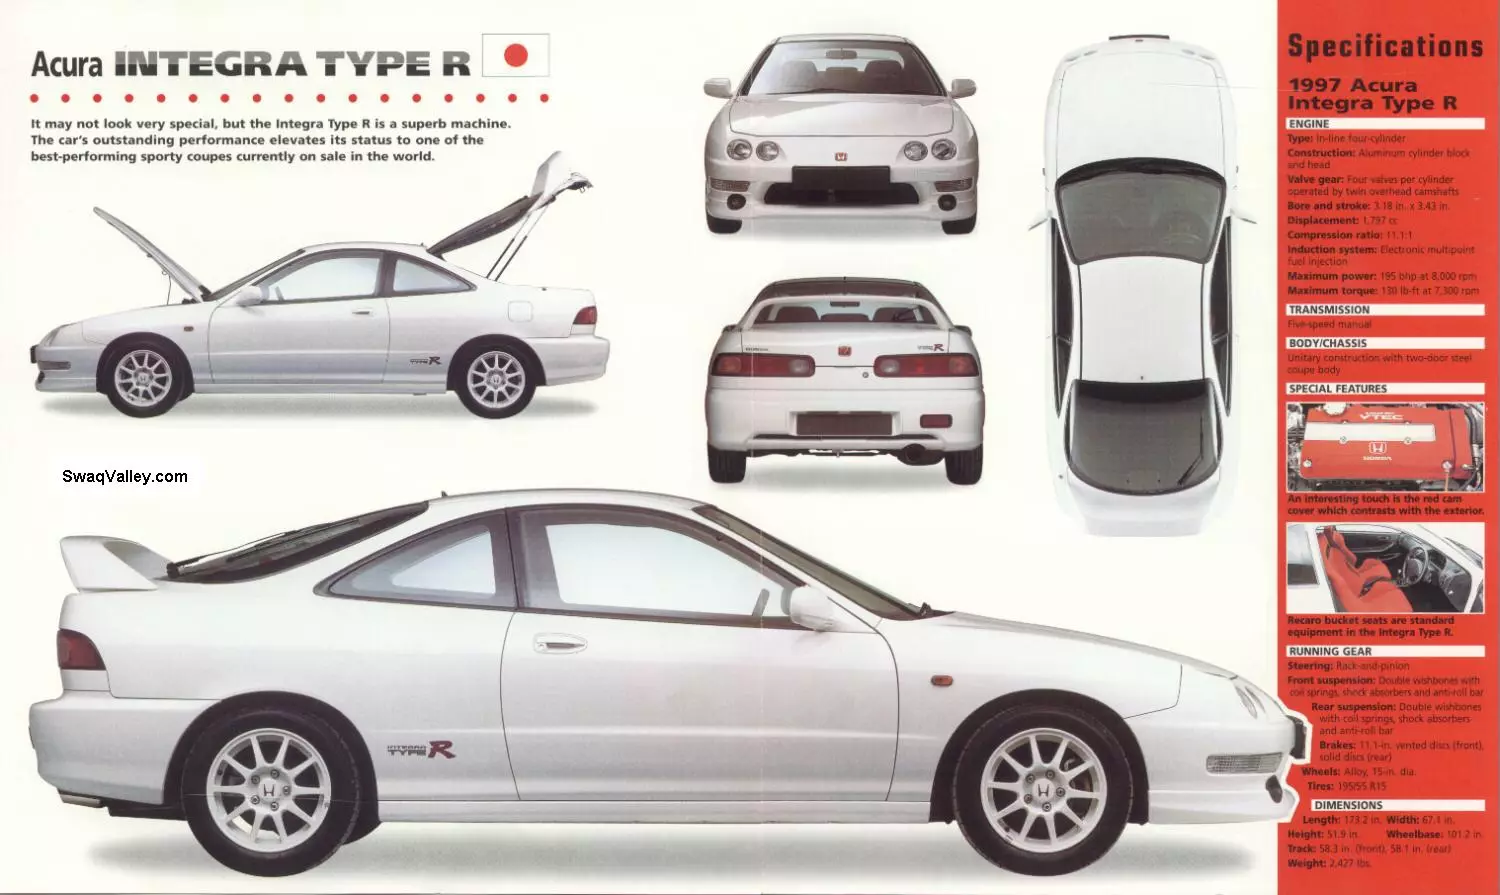 I-Acura Integra Type R, 1997